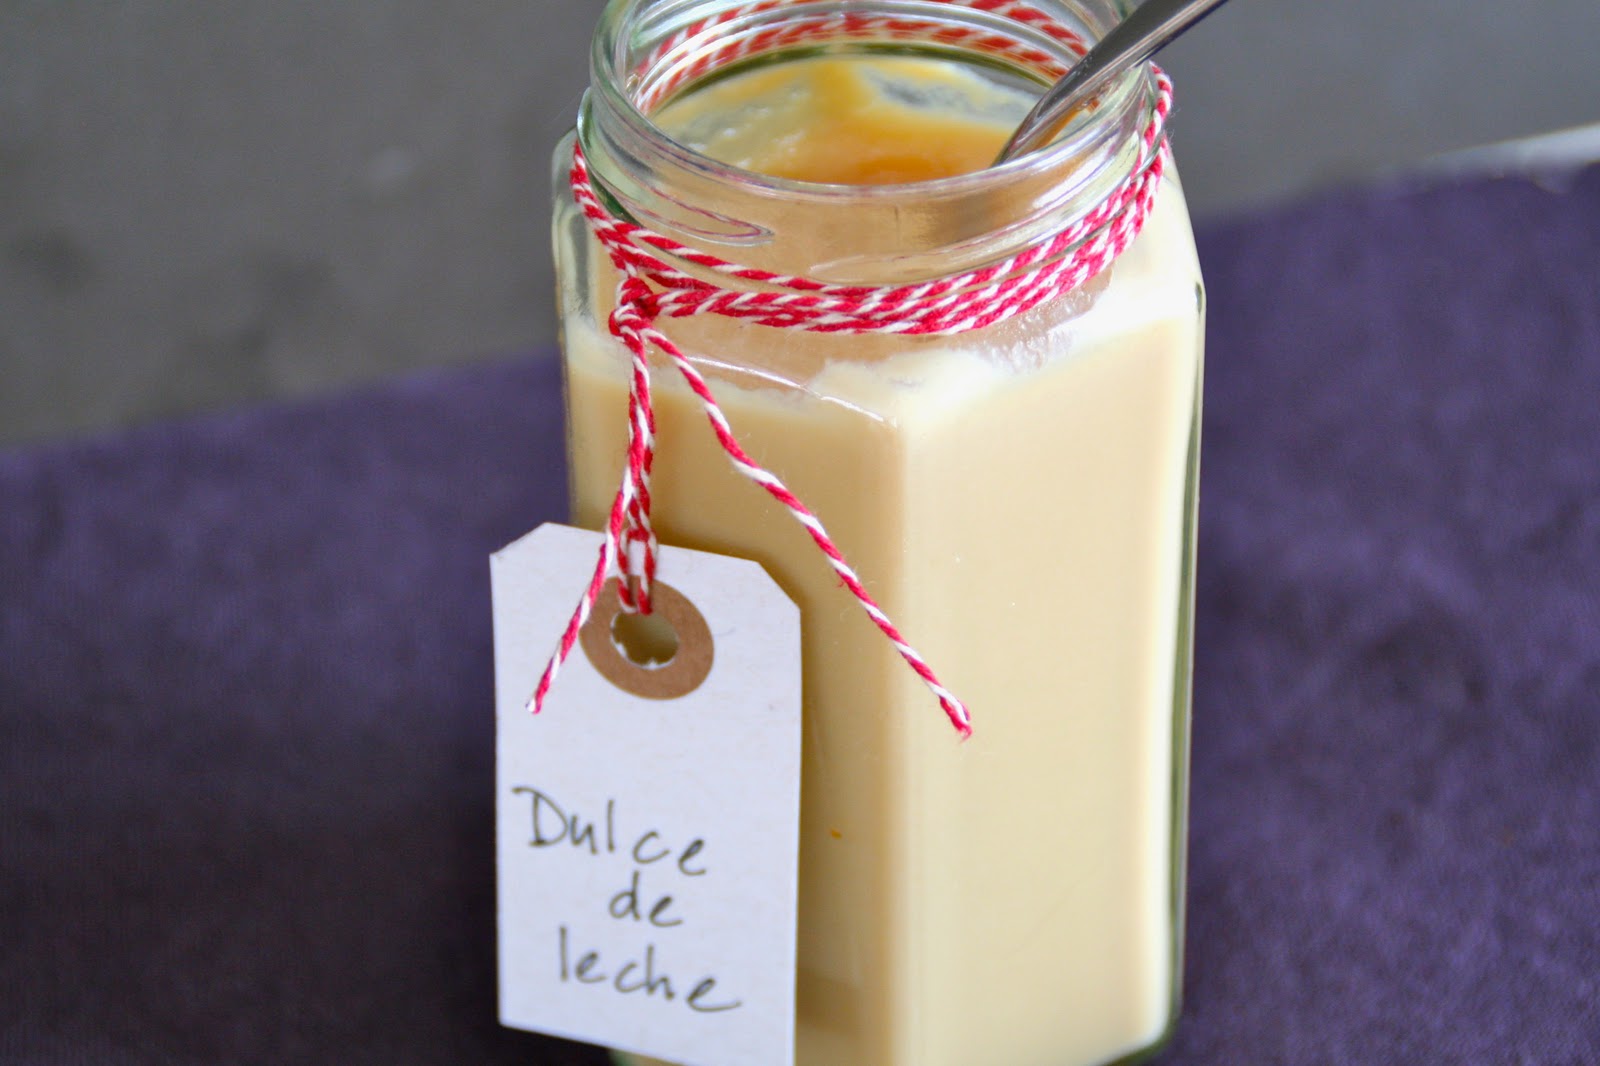 Dulce de leche - karamell krem/saus - Mat På Bordet